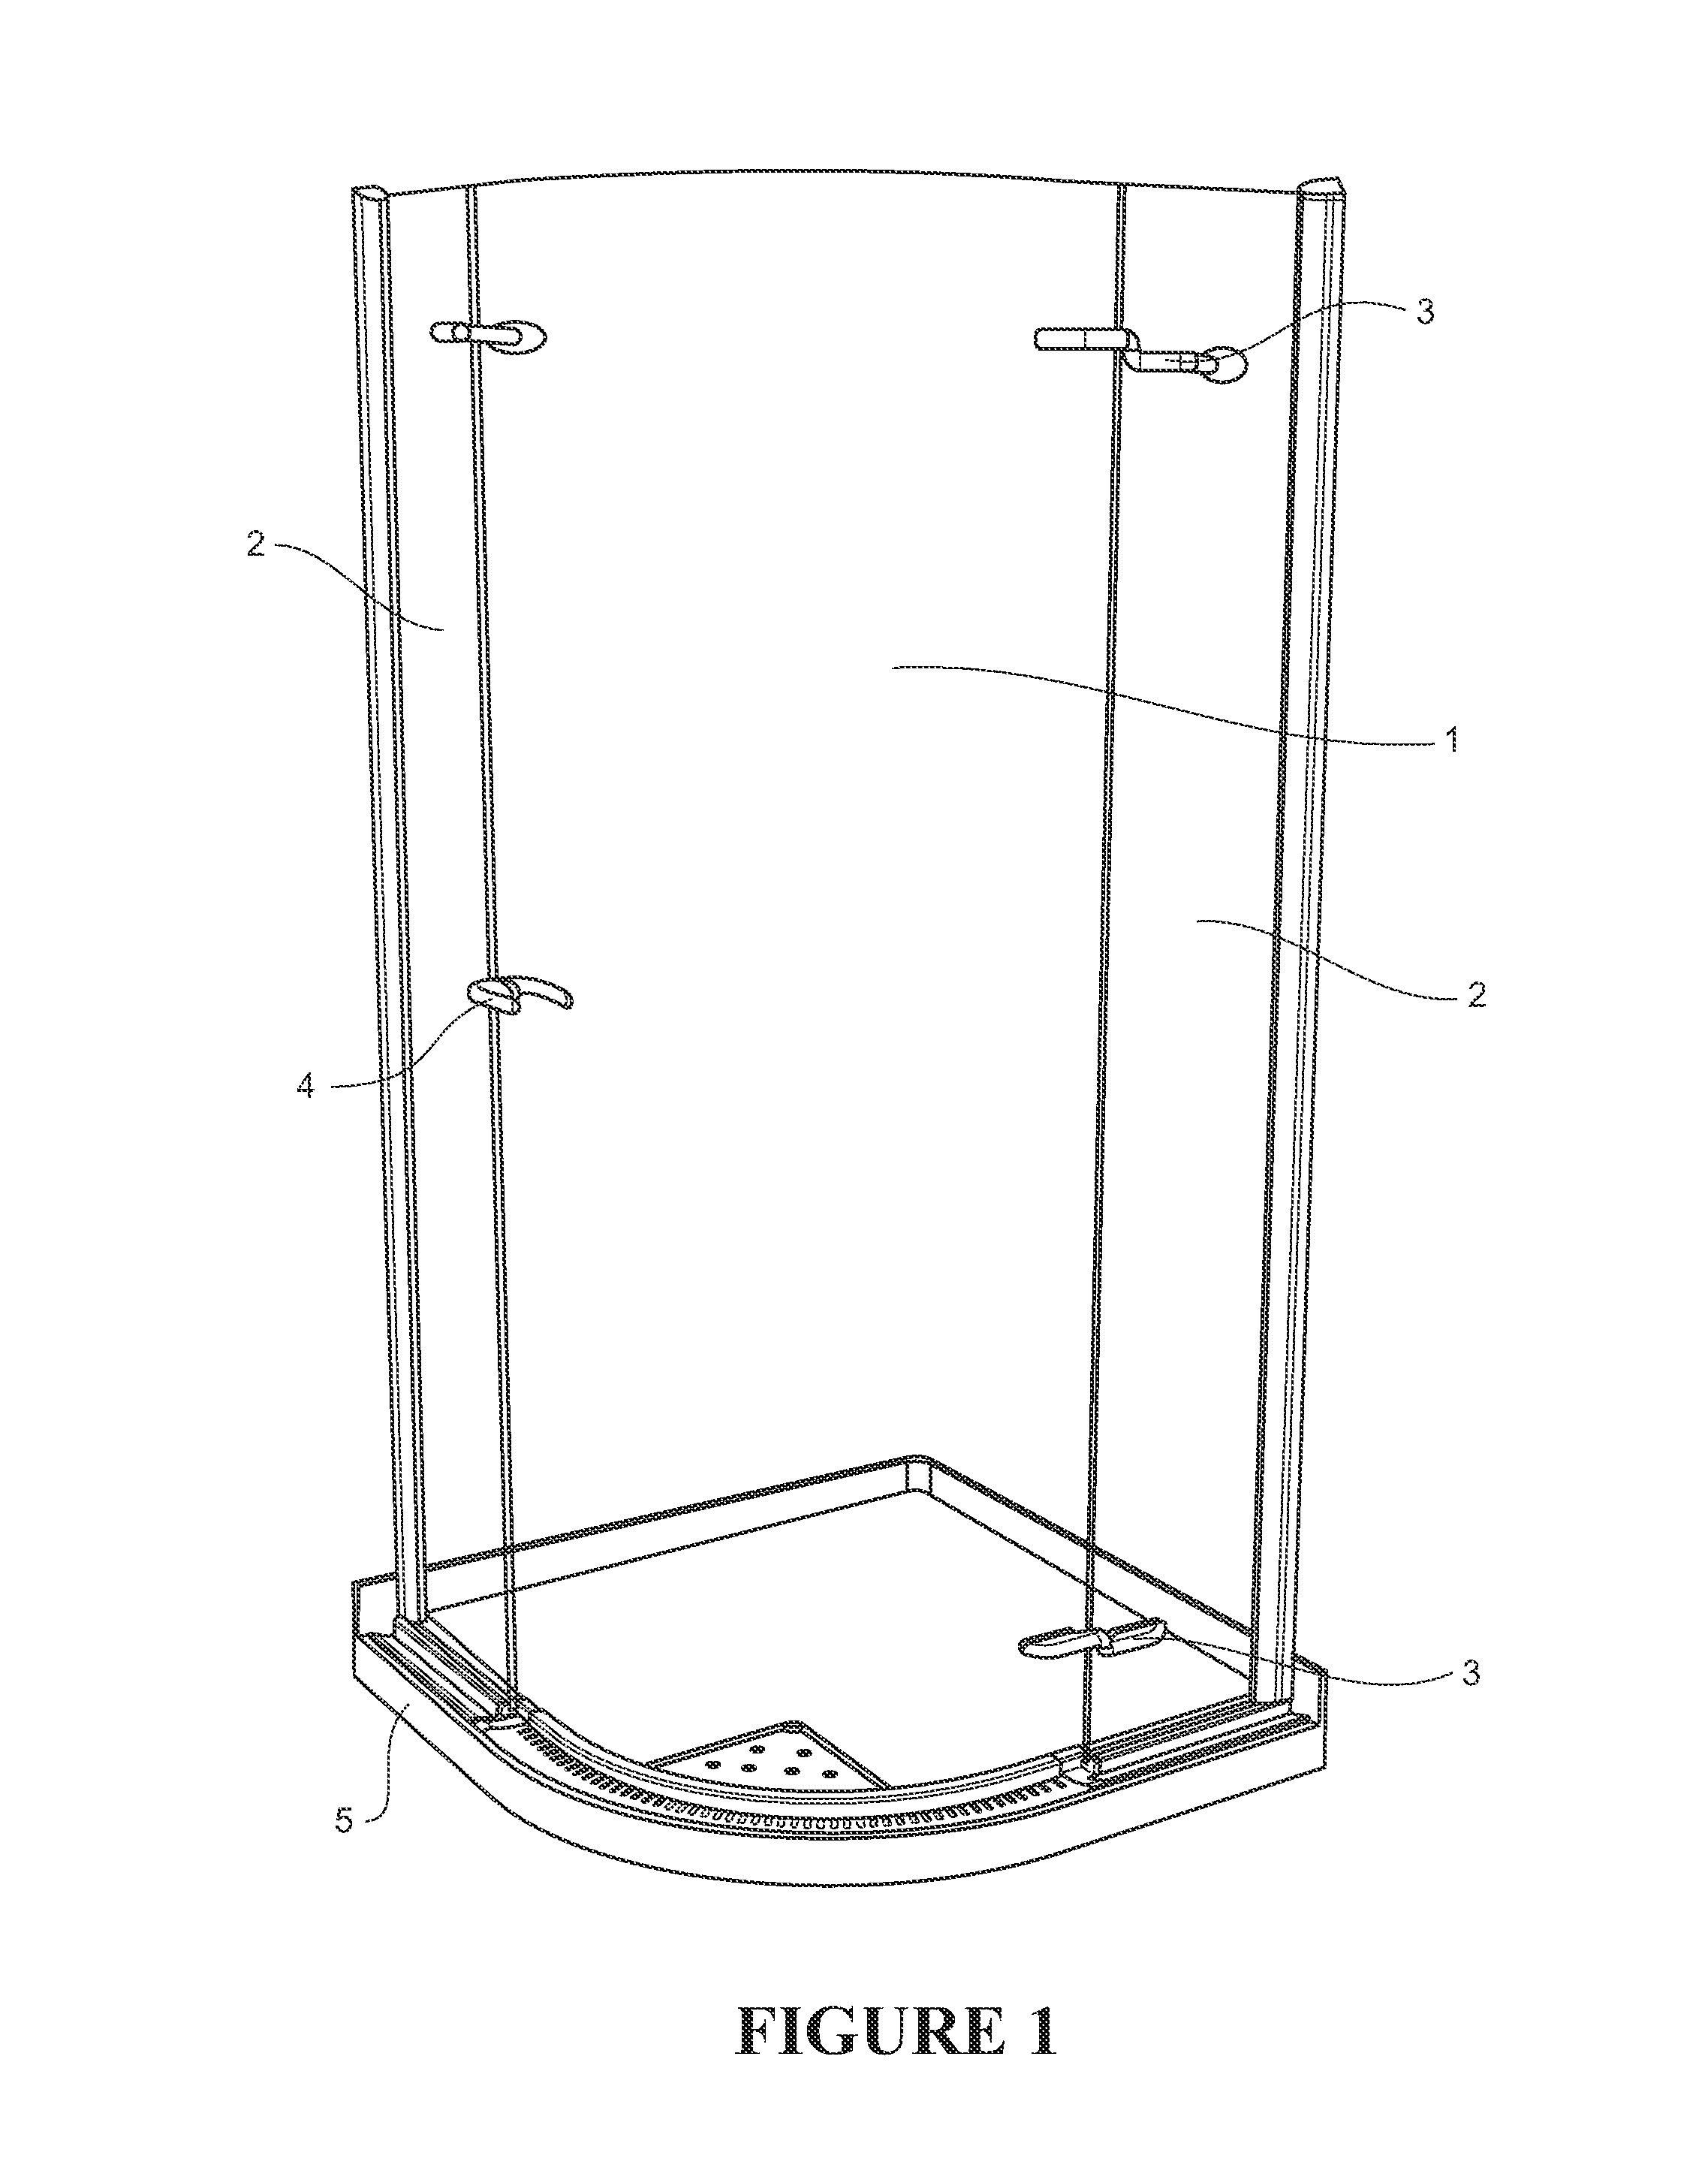 Shower enclosure and base